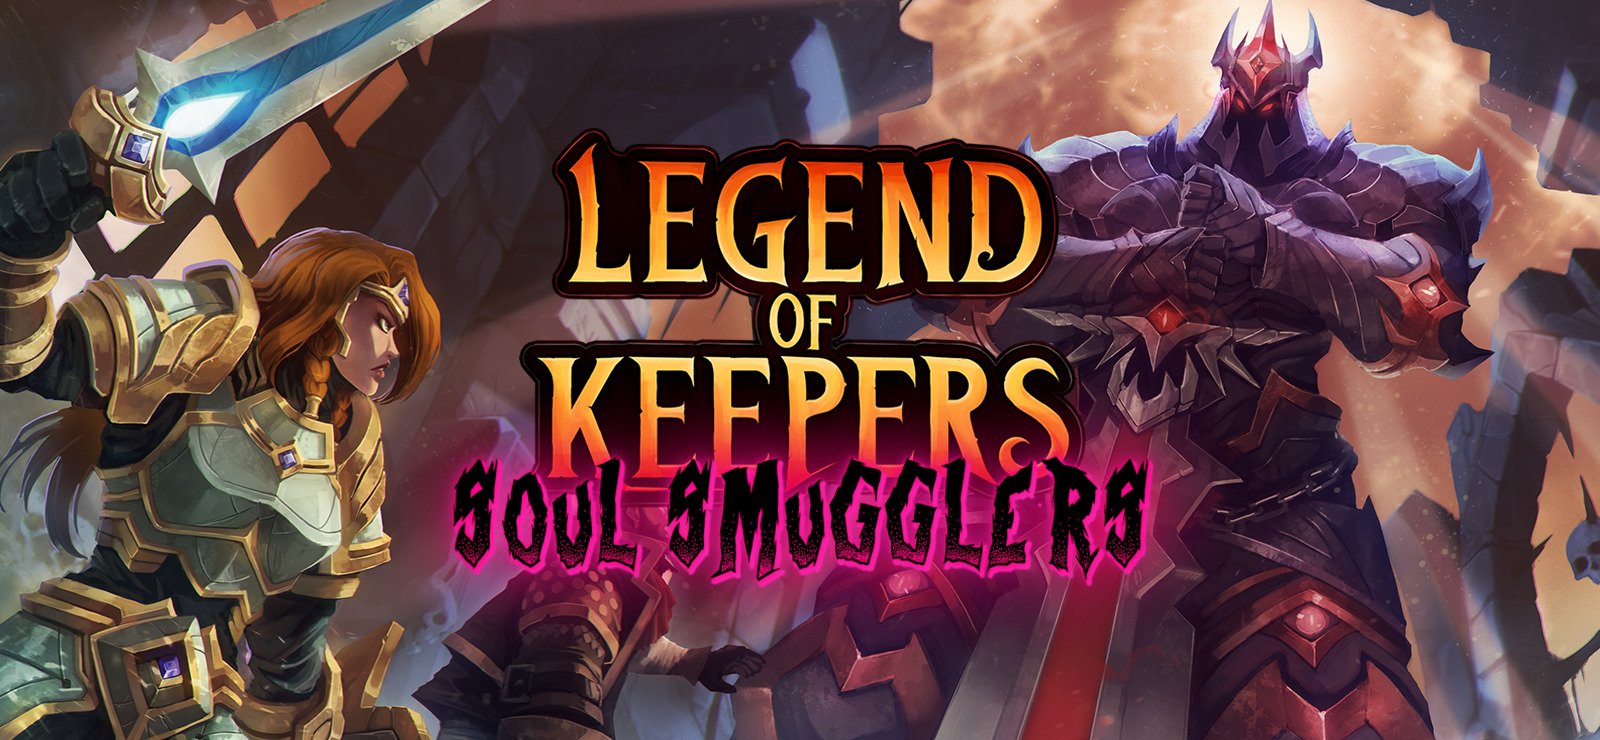 Legend of Keepers Soul Smugglers 6